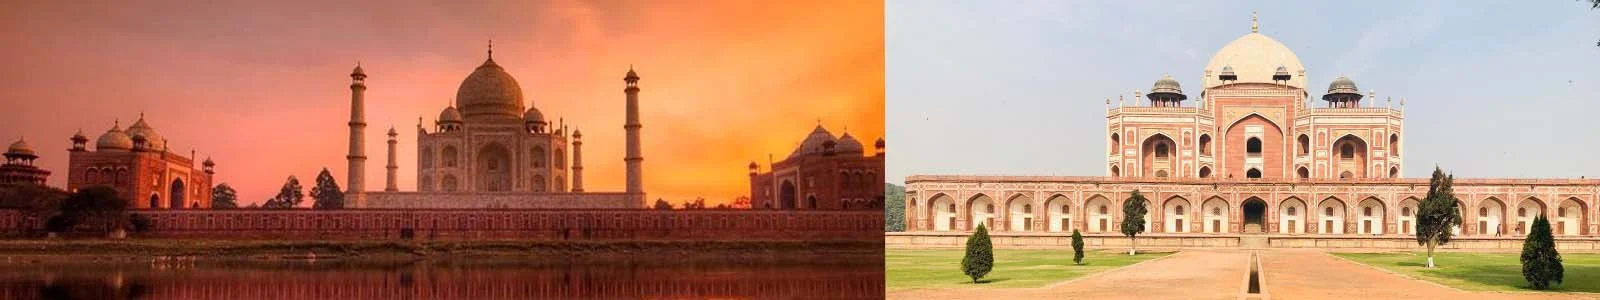 Full Day Taj Mahal Sunrise Excursion from Delhi